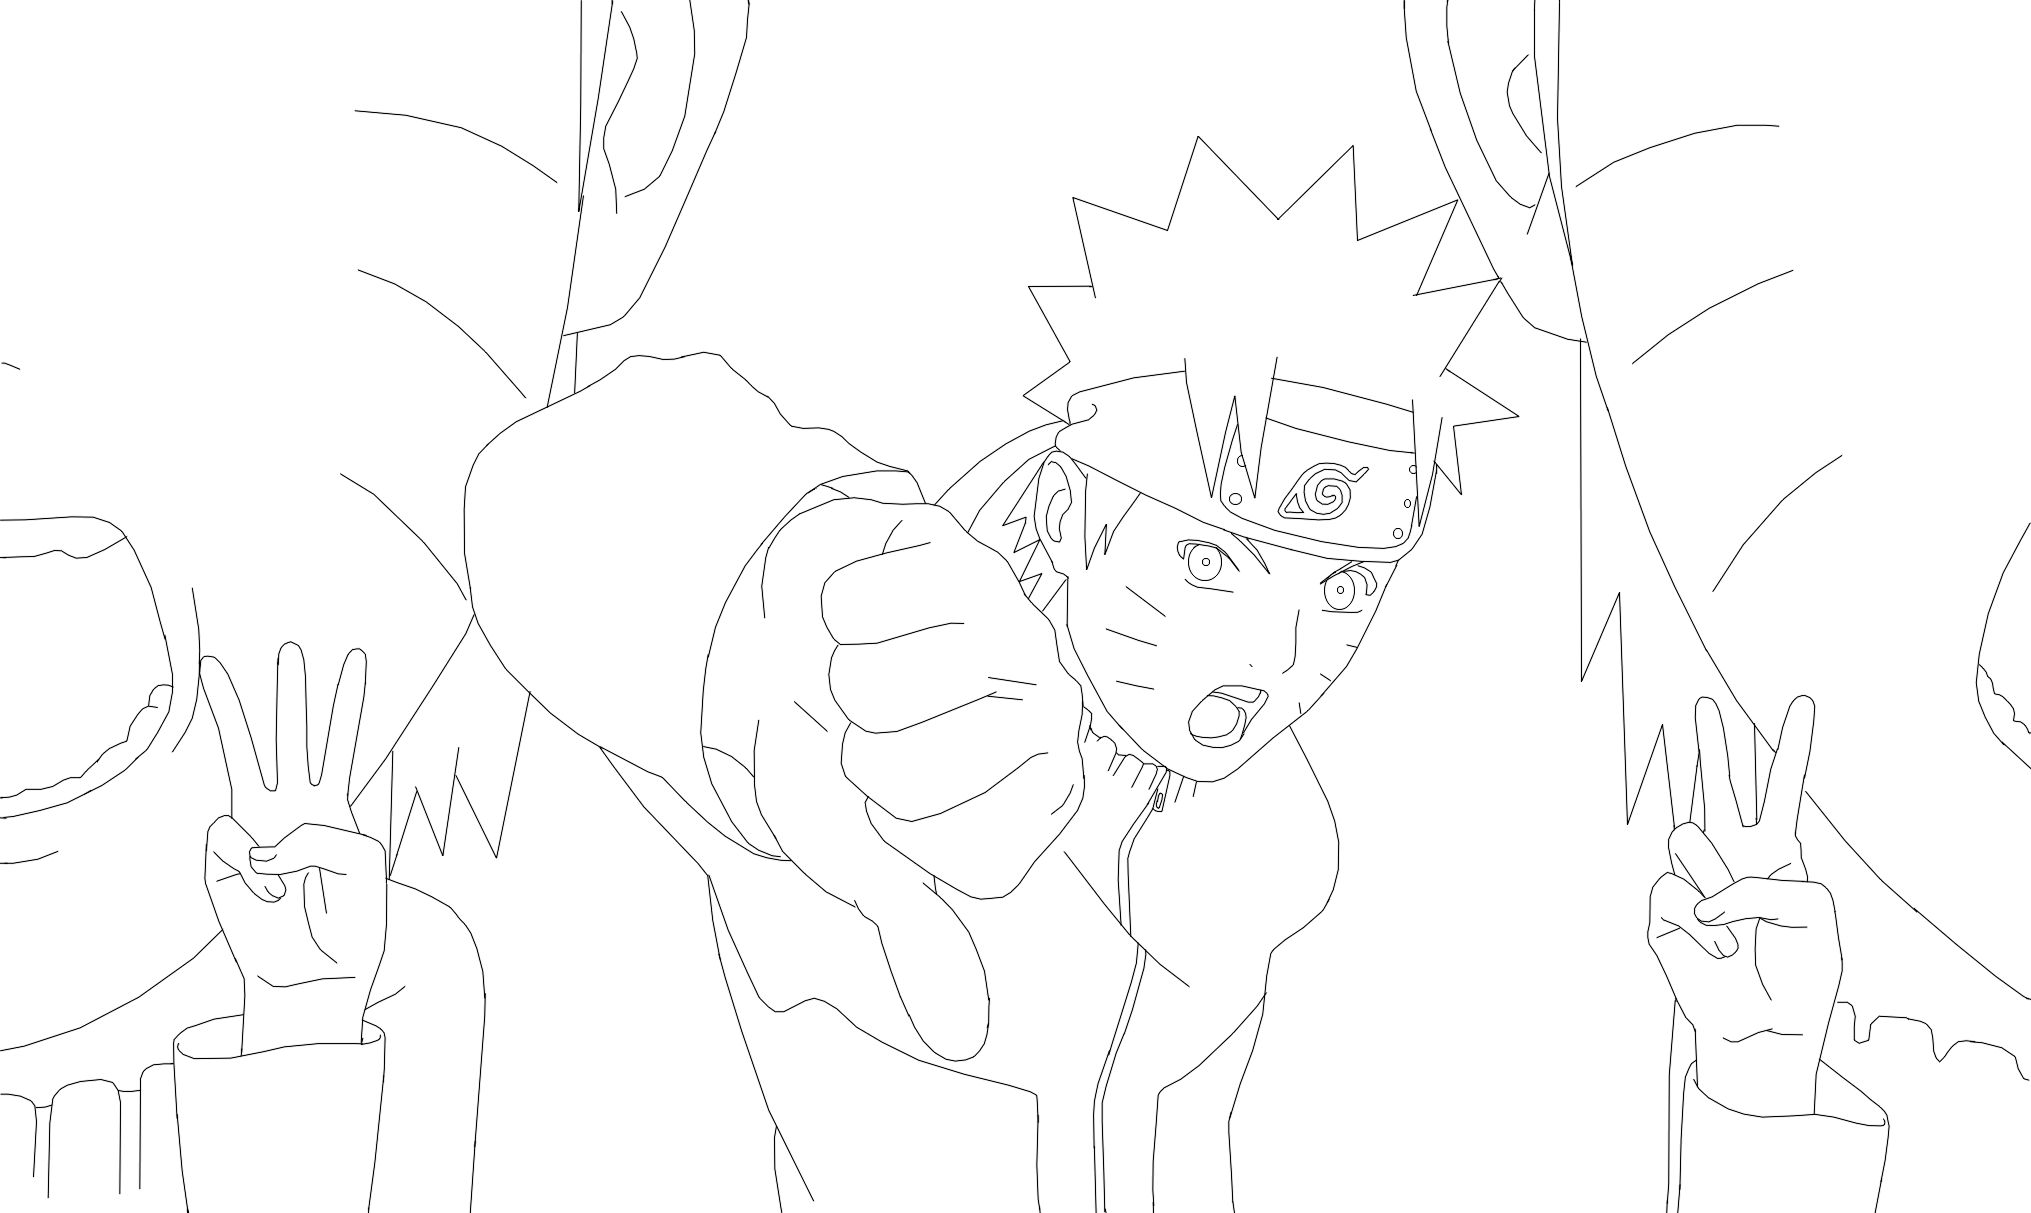 Coloring page - Naruto herói